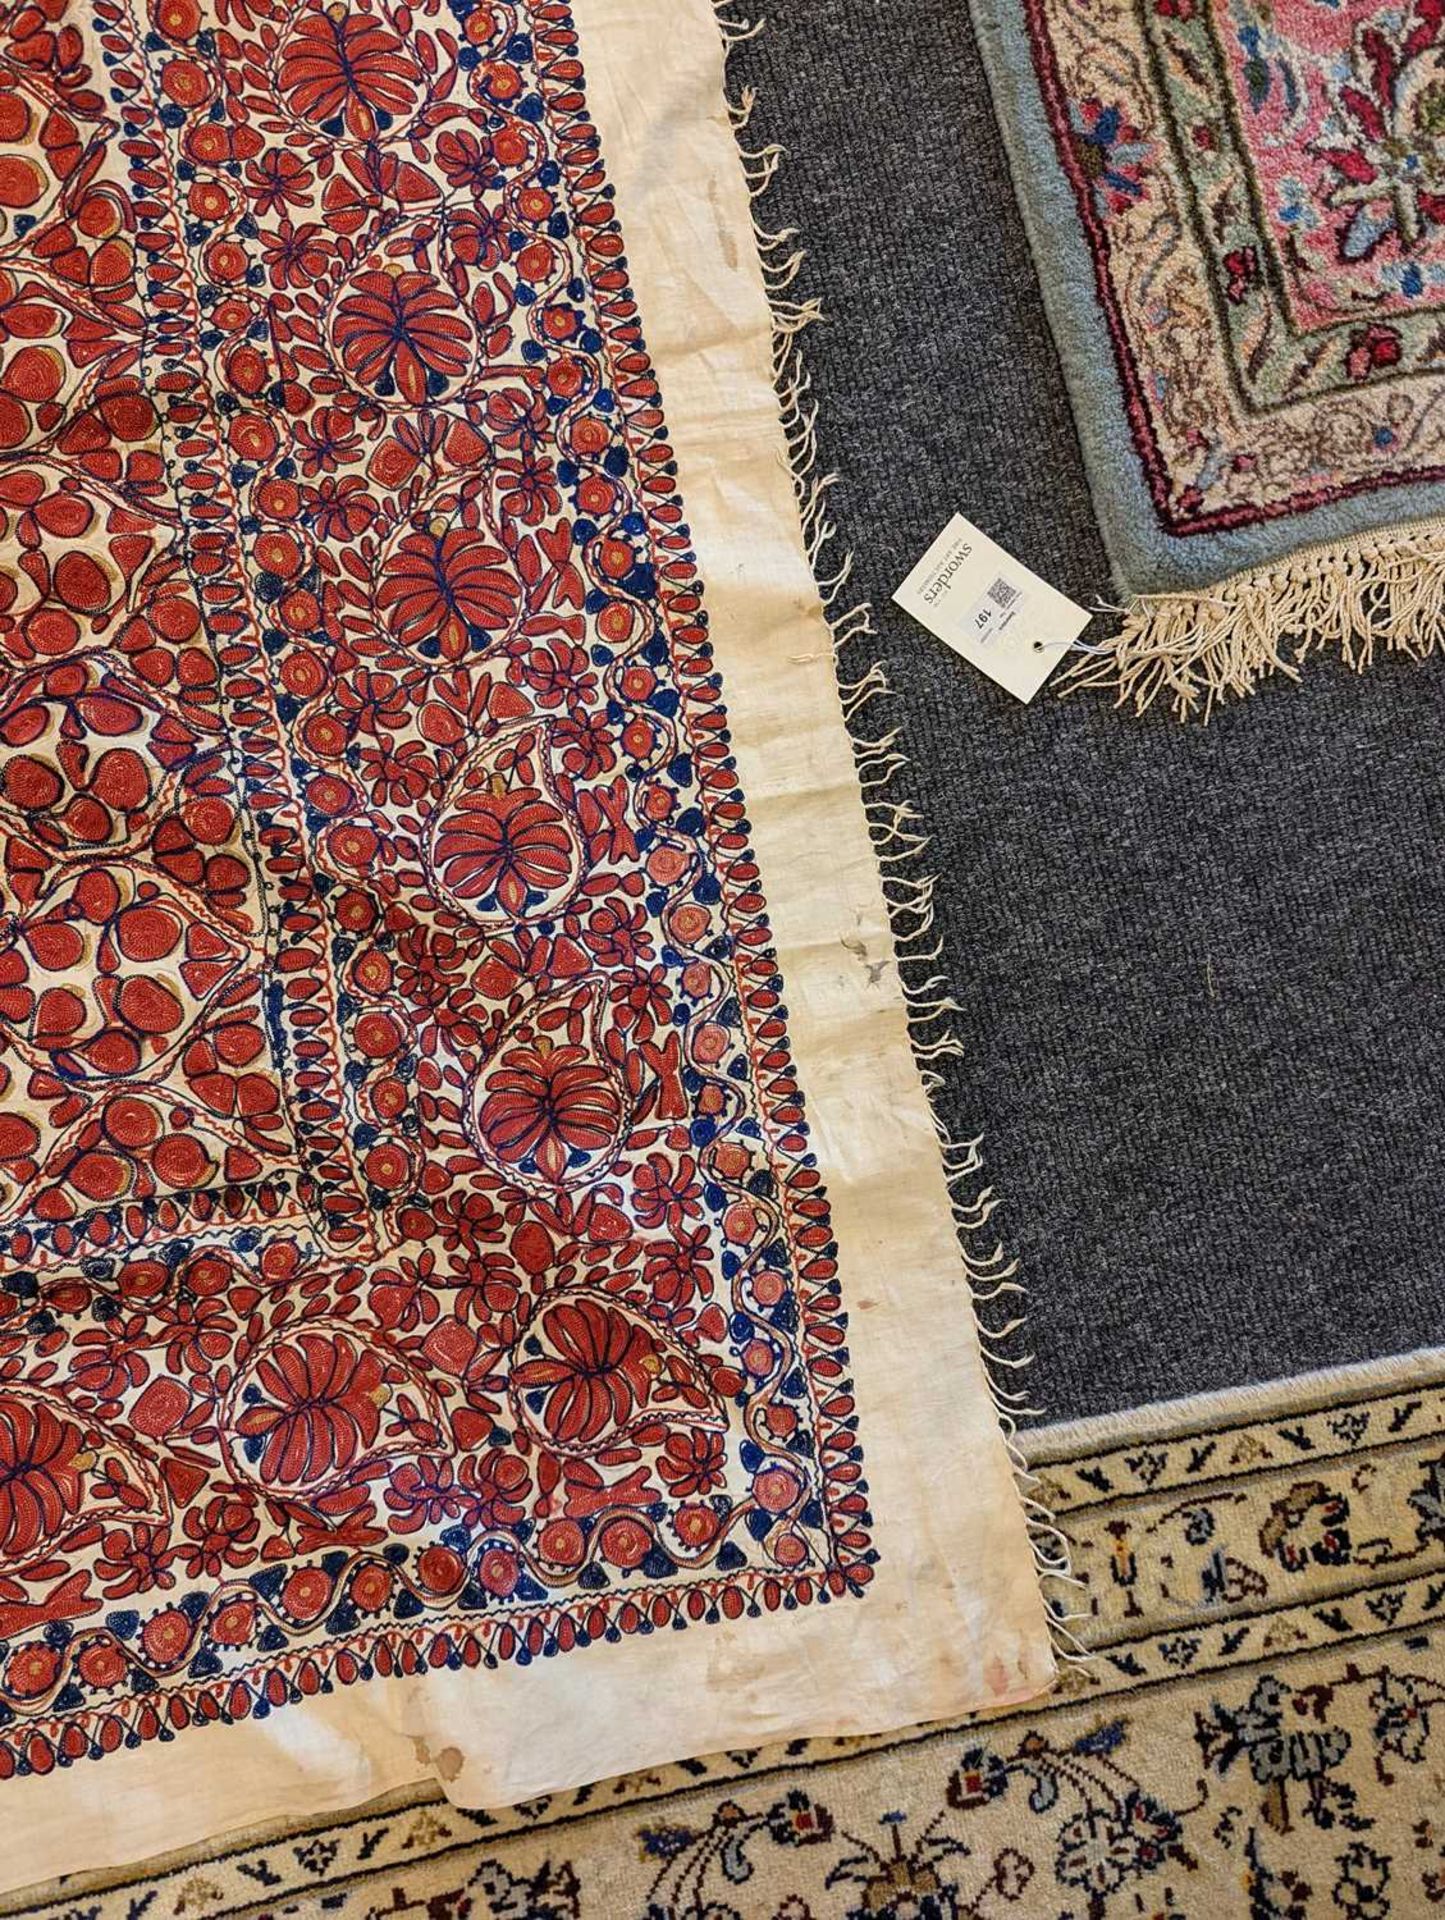 A Suzani textile, - Image 9 of 19